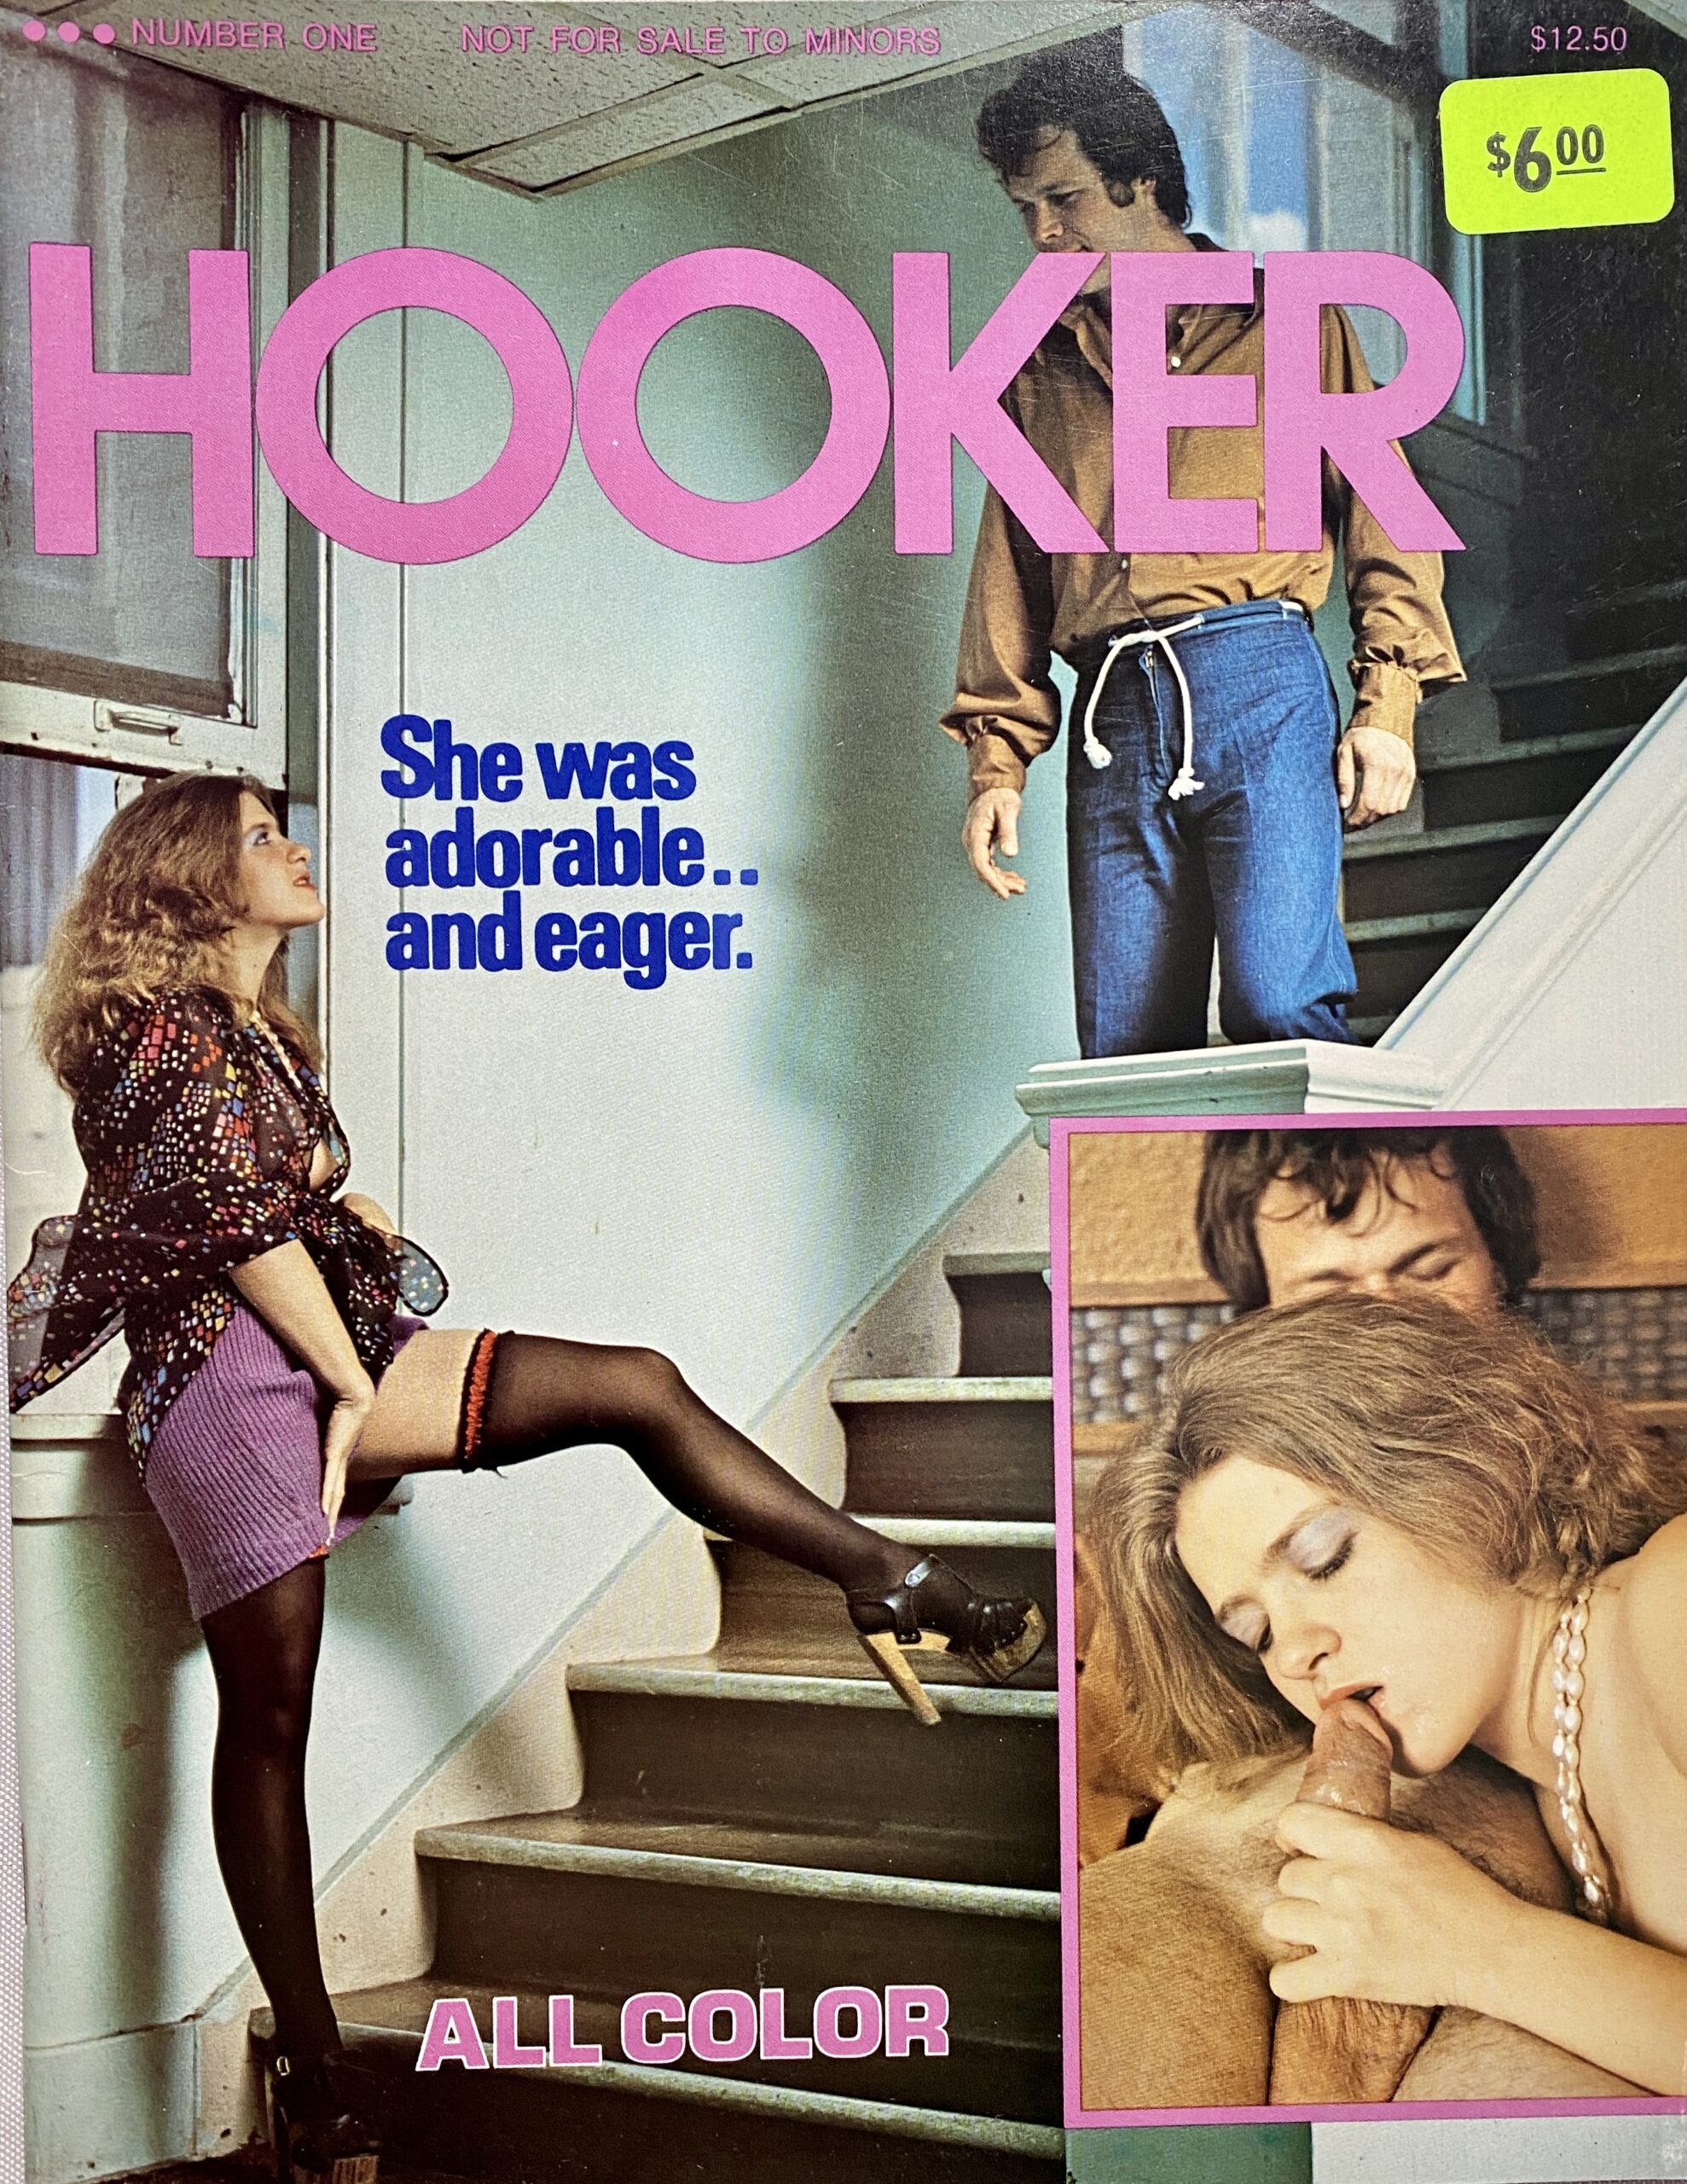 Hooker No. 1 80'S Adult Parliament Mens XXX Magazine - Vintage Magazines 16